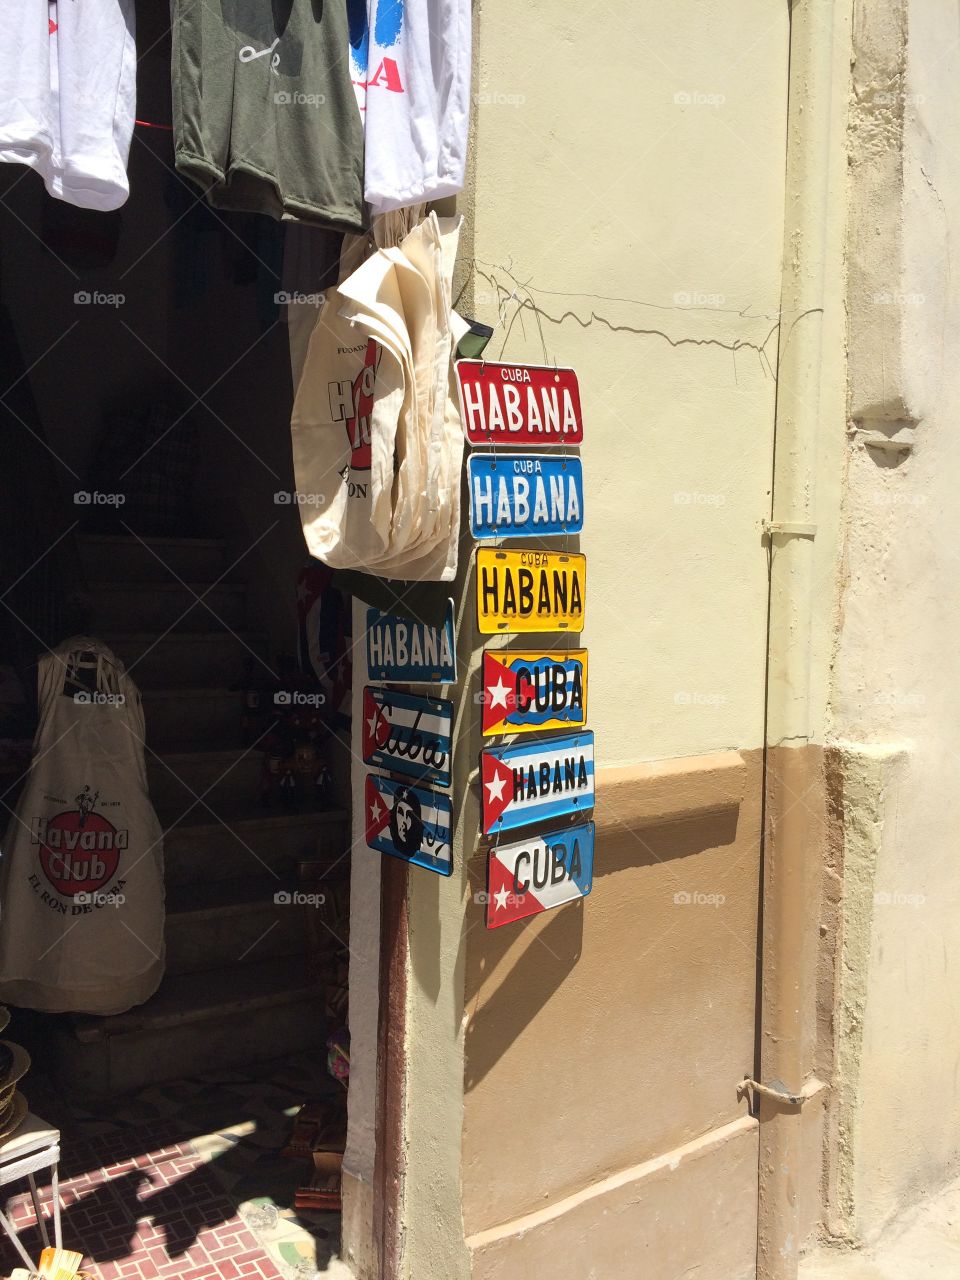 Havana - Cuba store